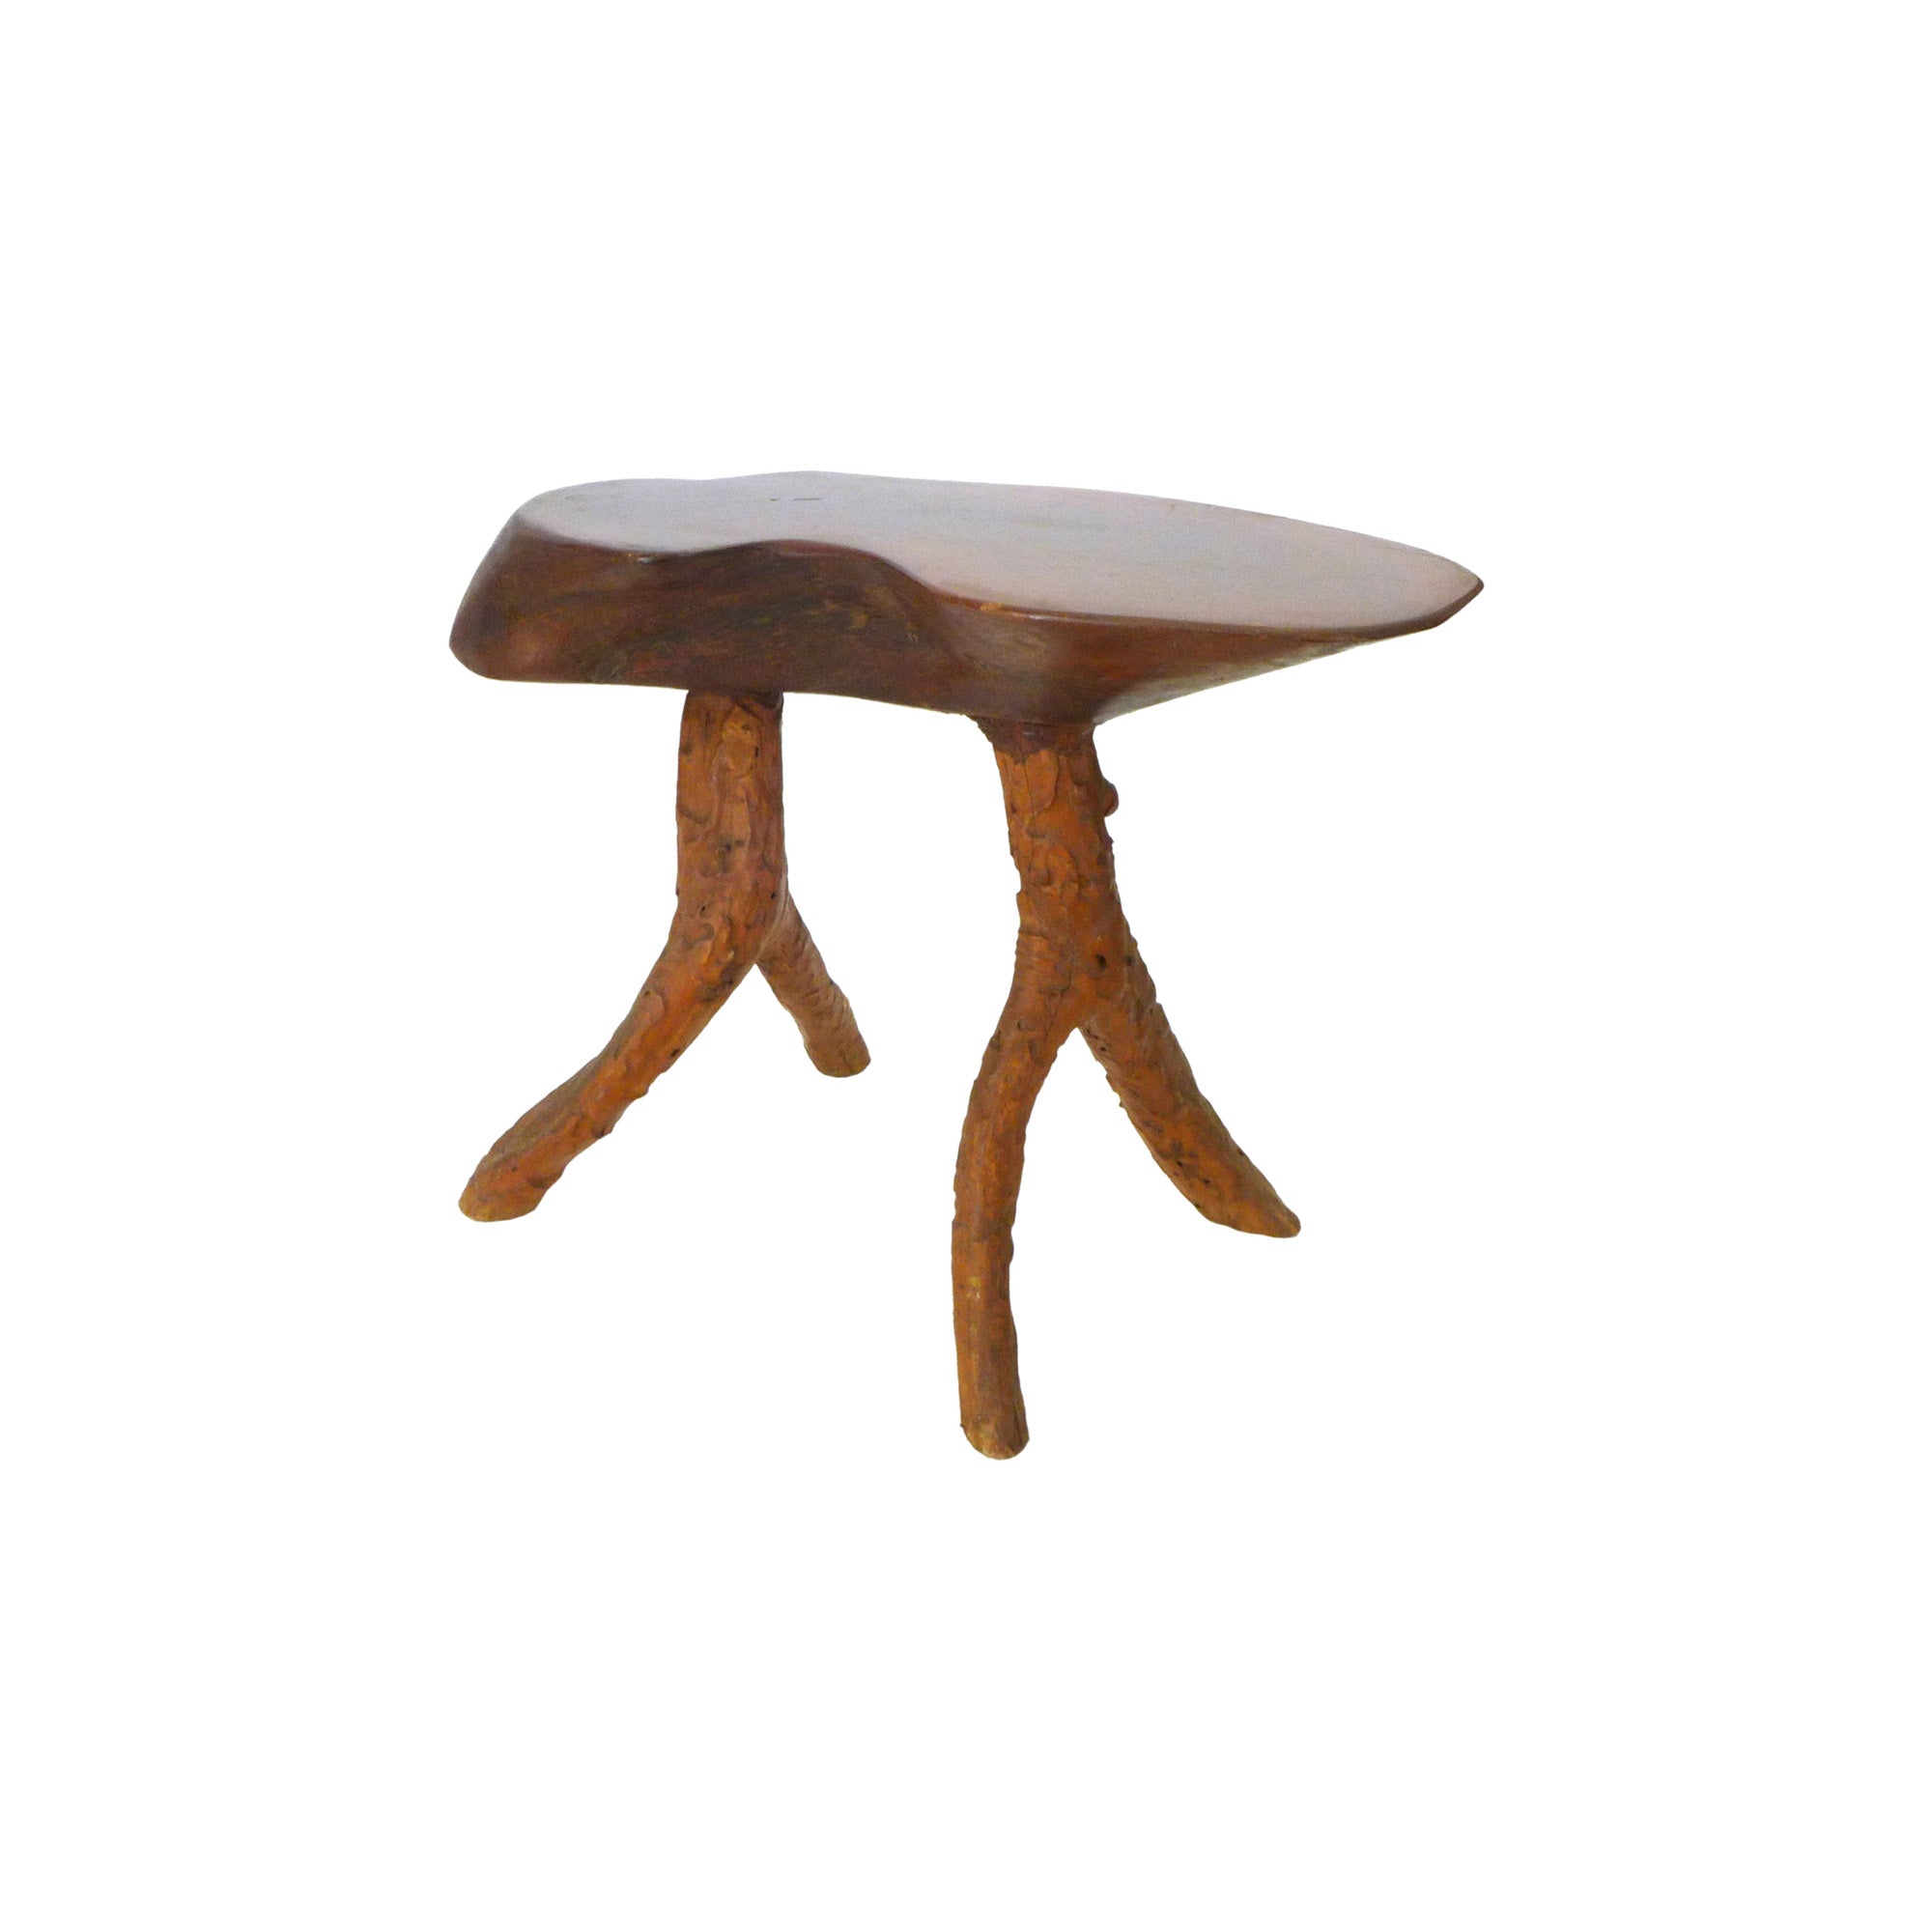 Small Organic Burl Wood Table